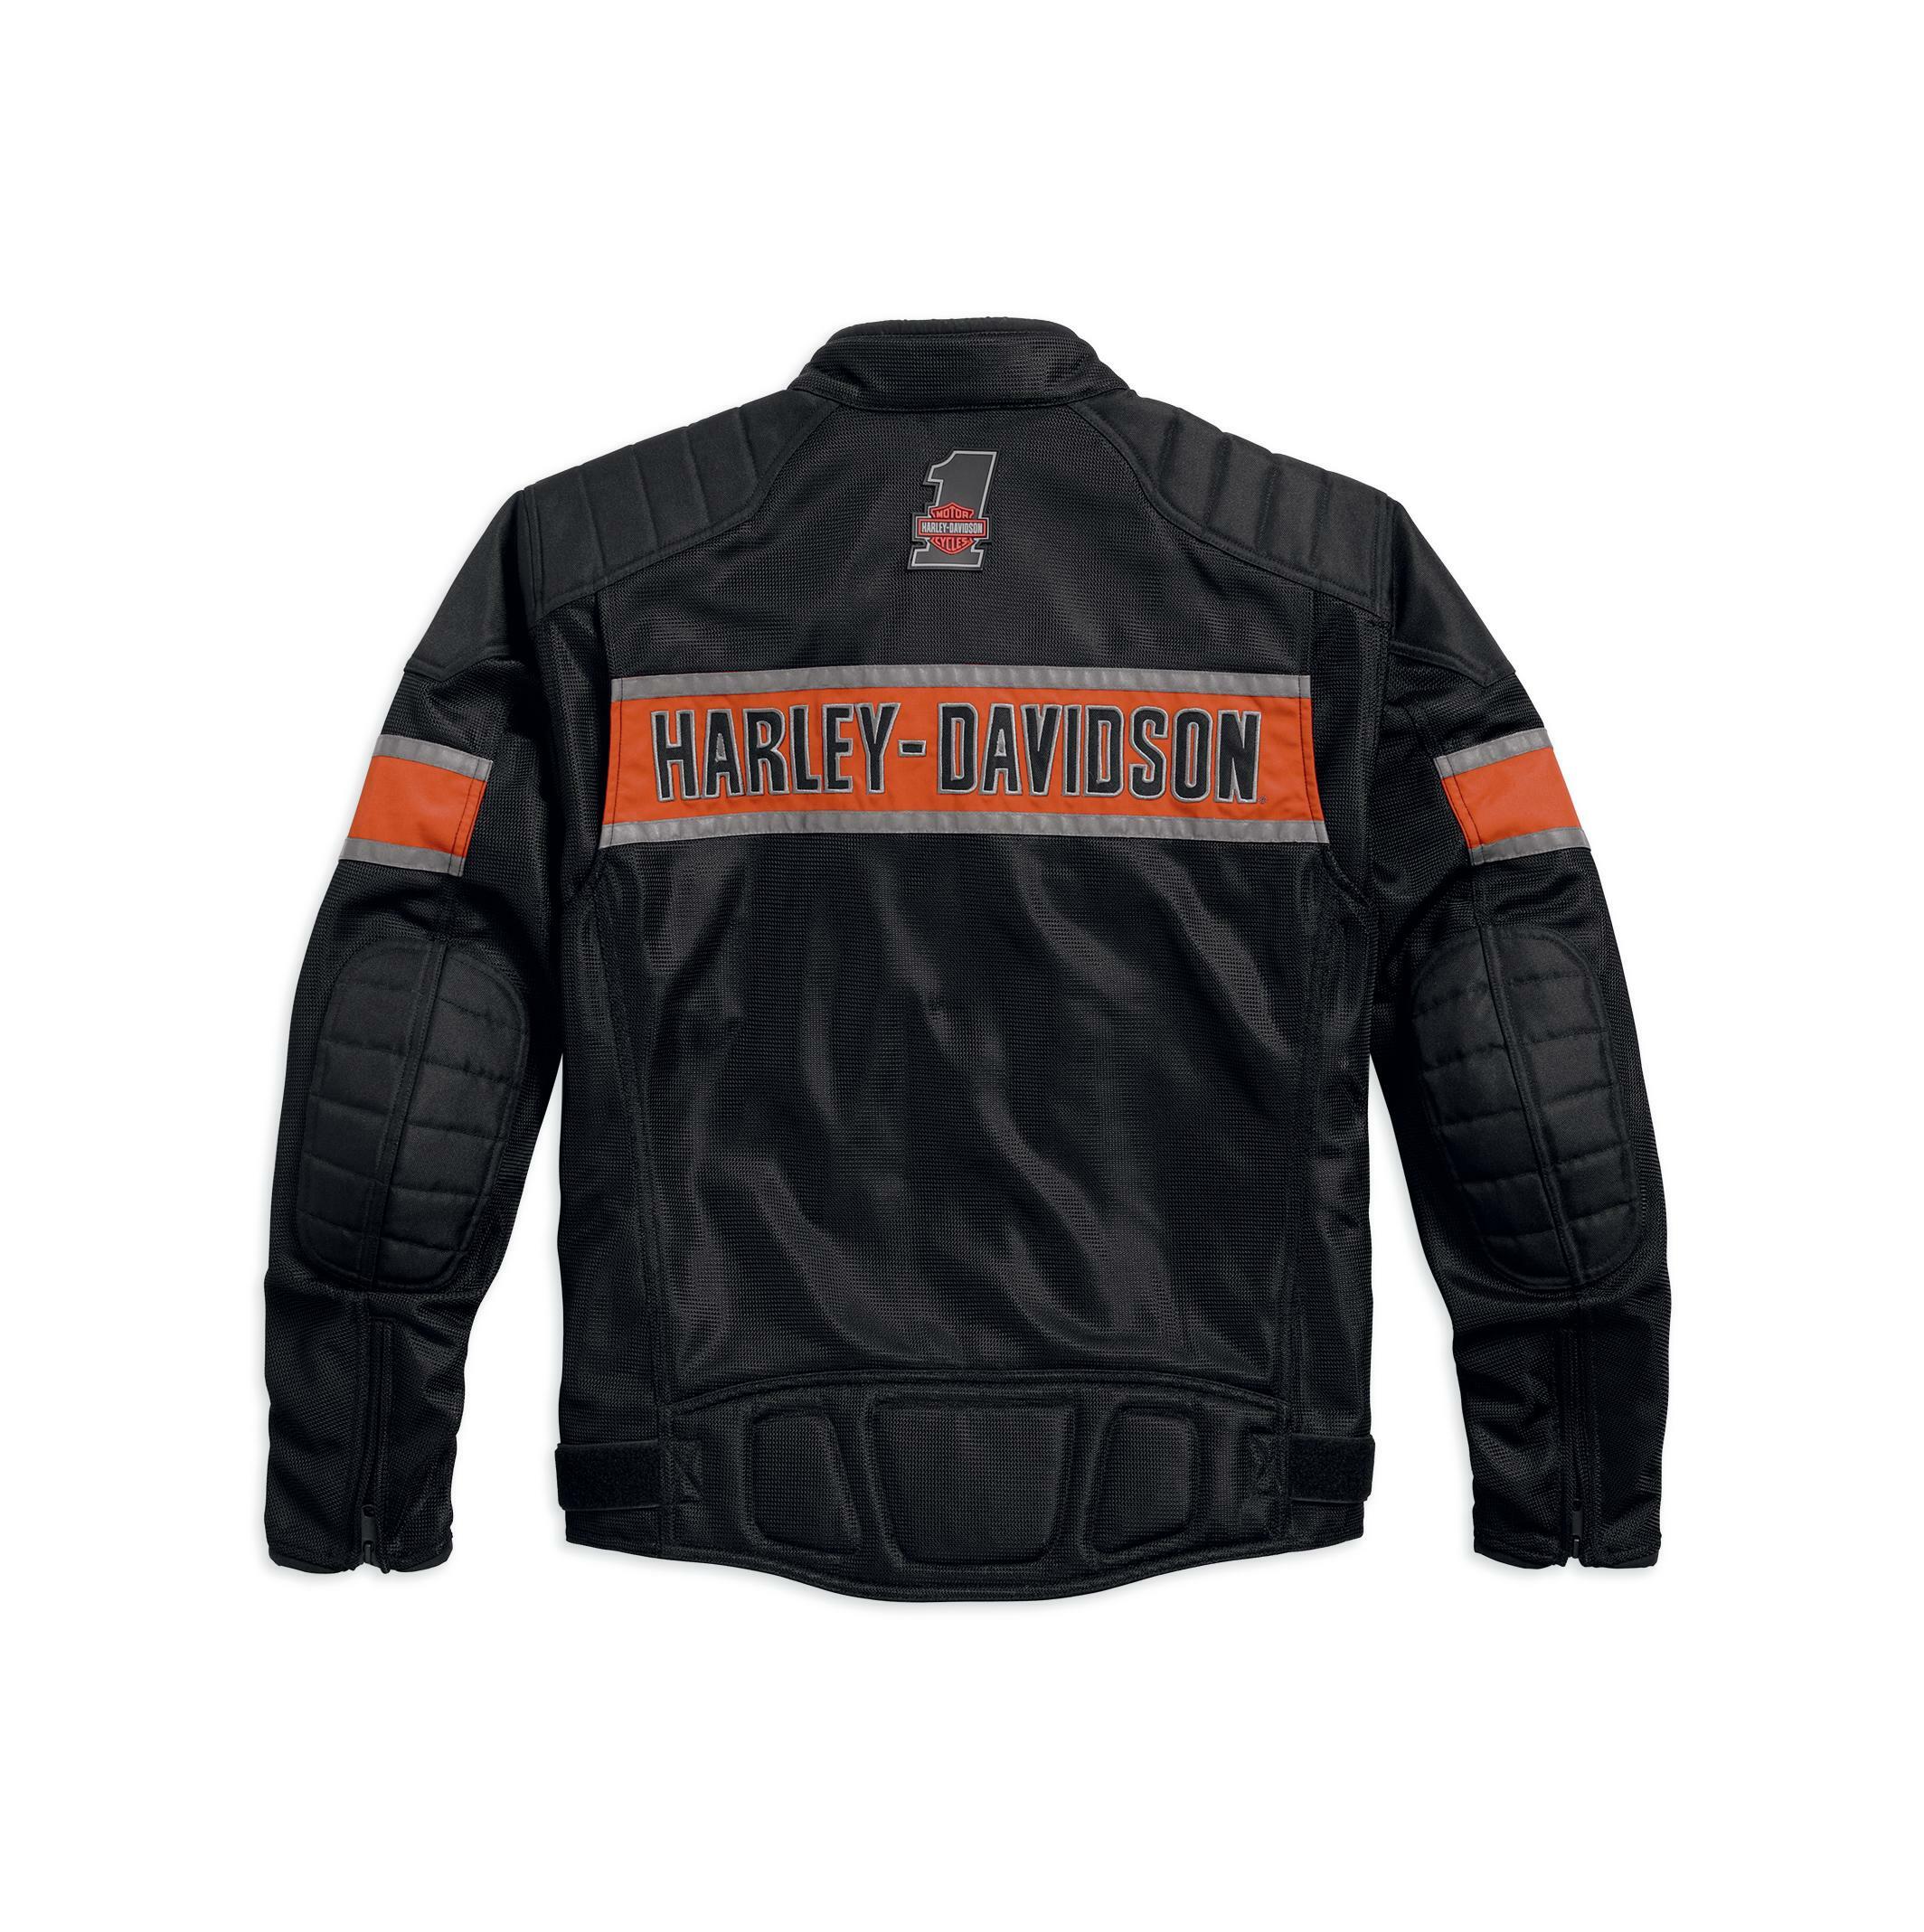 Harley-Davidson Trenton Mesh Riding Jacket